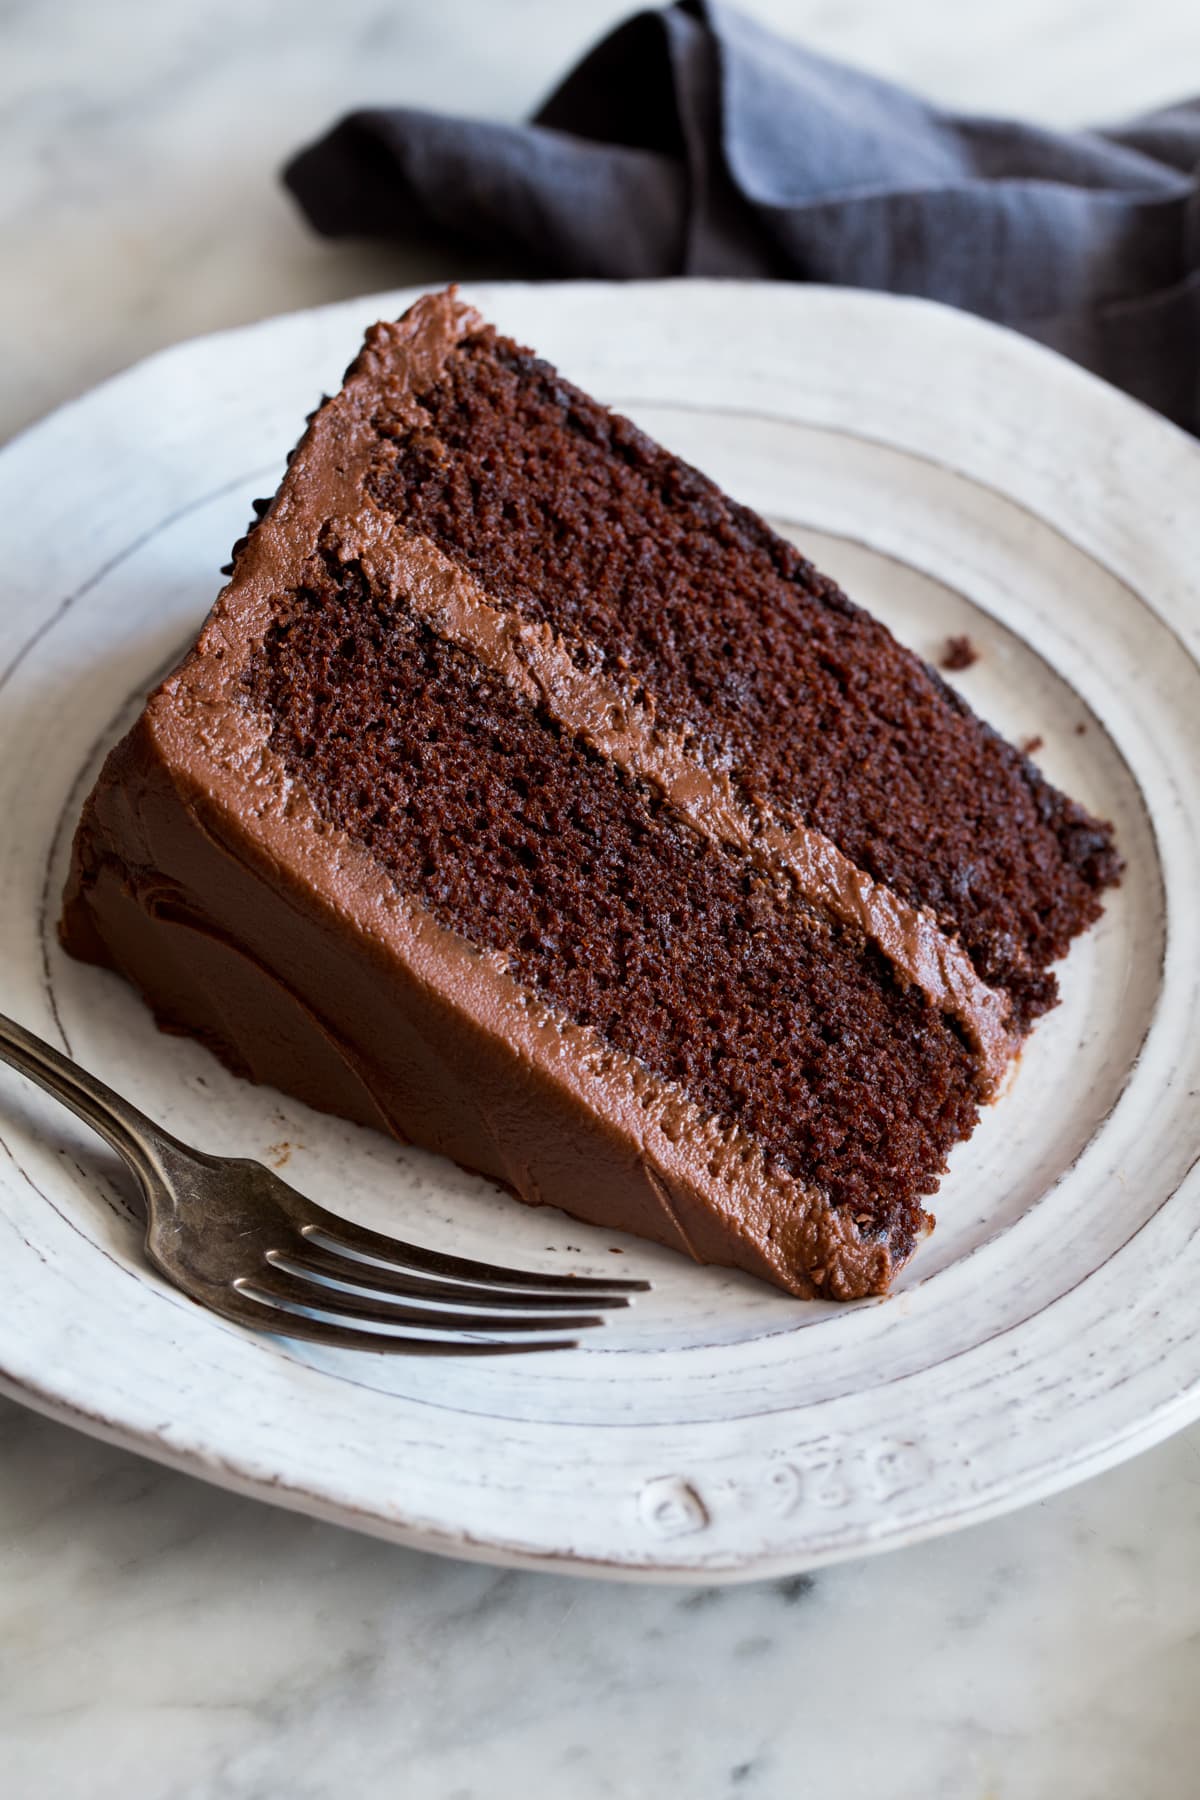 https://www.cookingclassy.com/wp-content/uploads/2019/10/chocolate-cake-3.jpg